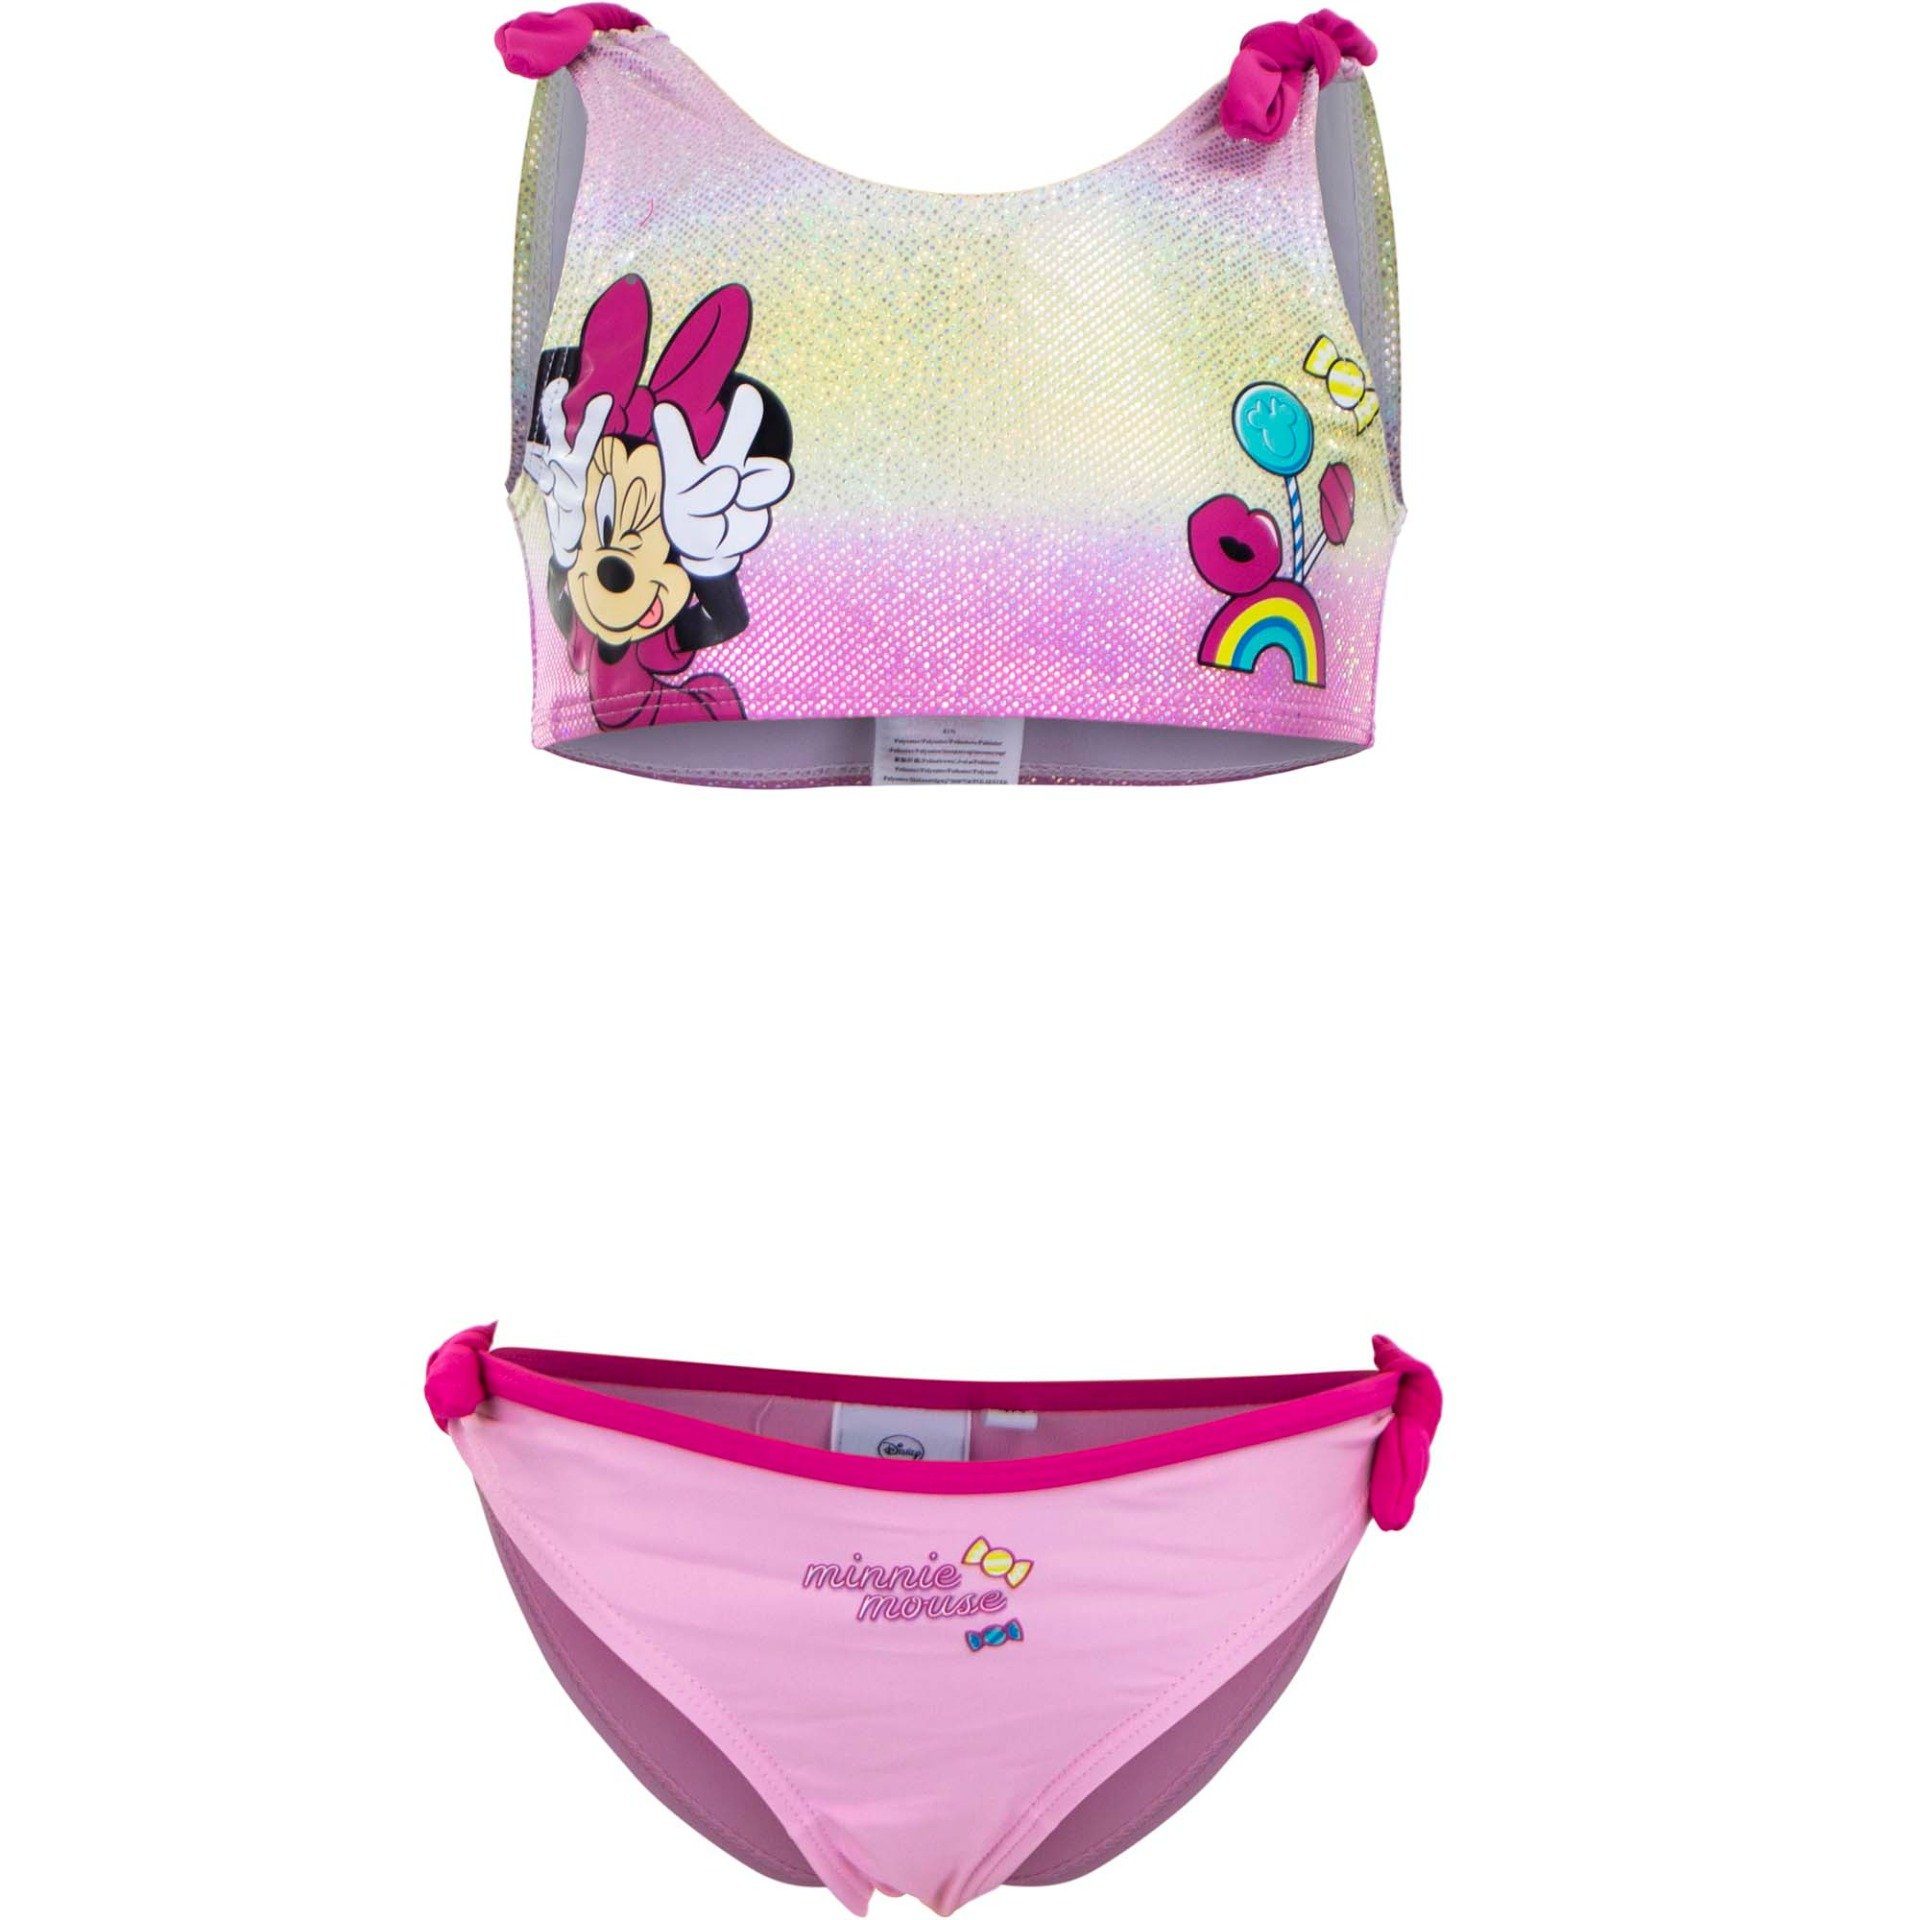 Gr. Bikini Kinder Mouse Mädchen Disney Minnie Maus Bustier-Bikini bis 128 Pink 98 Minnie